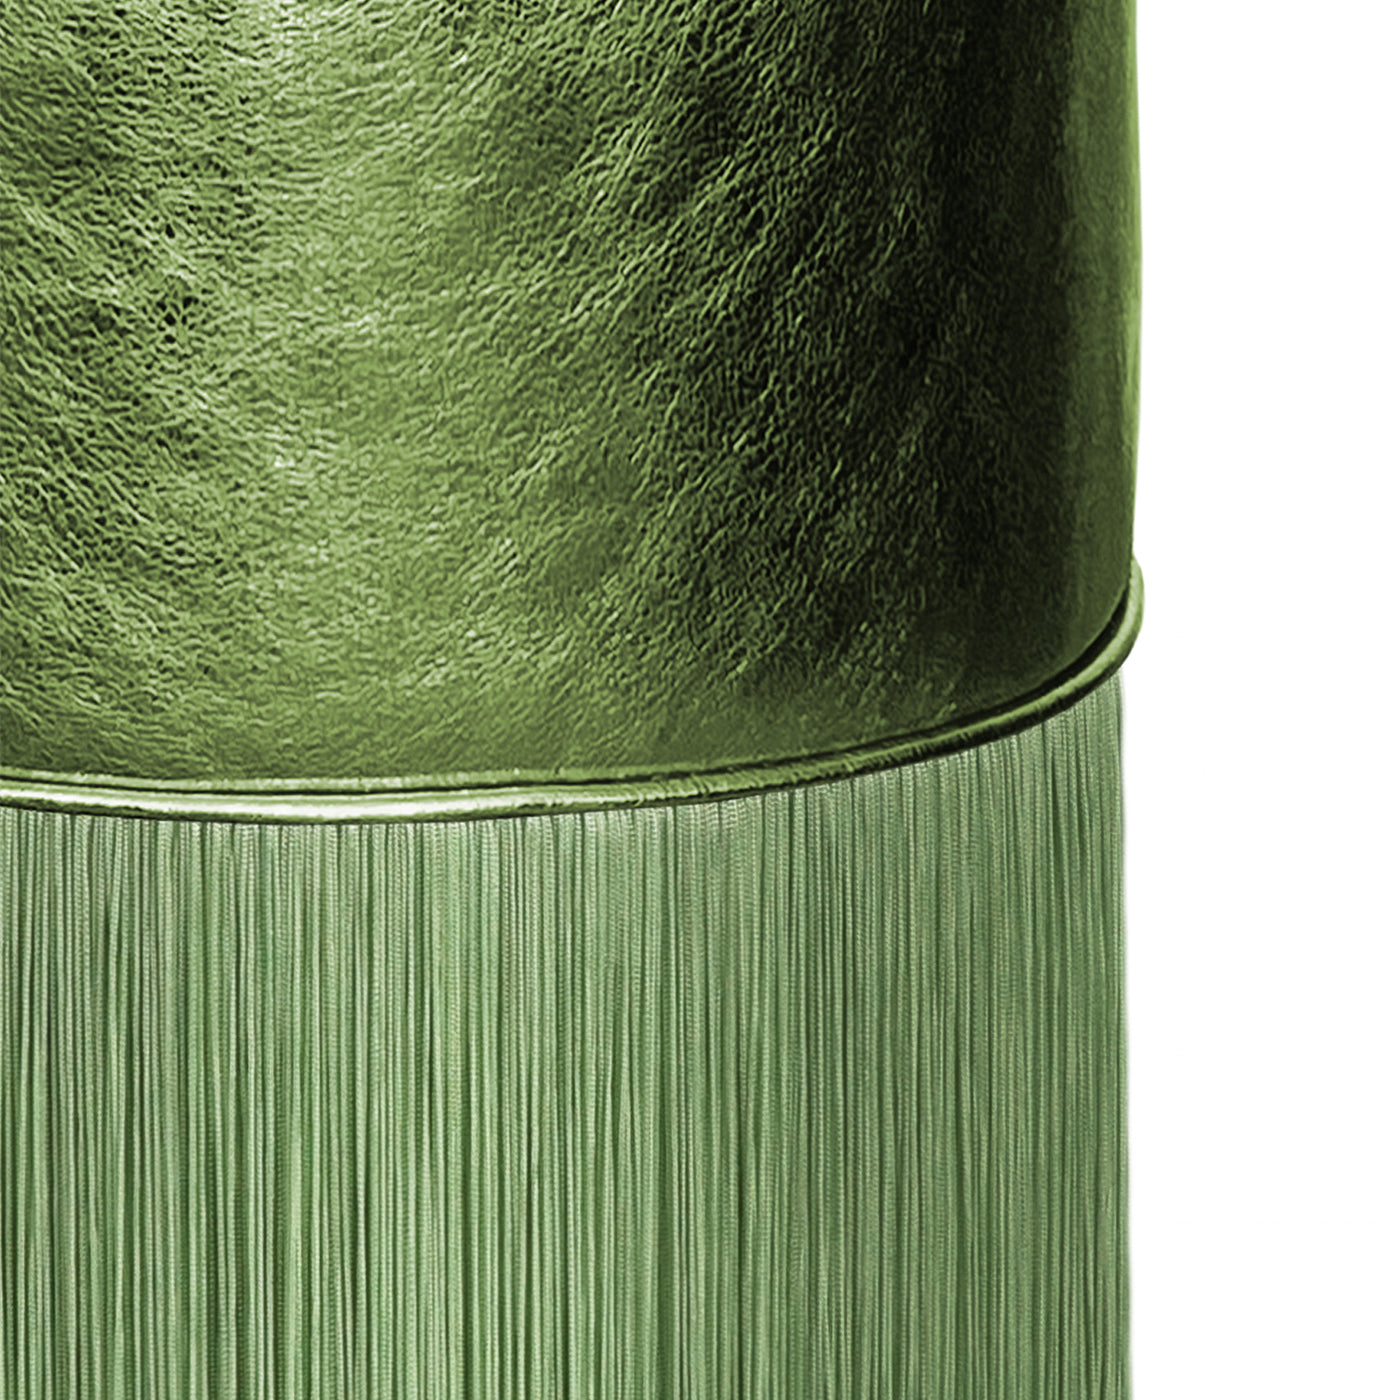 Gleaming Green Metallic Leather Pouf by Lorenza Bozzoli - Alternative view 1